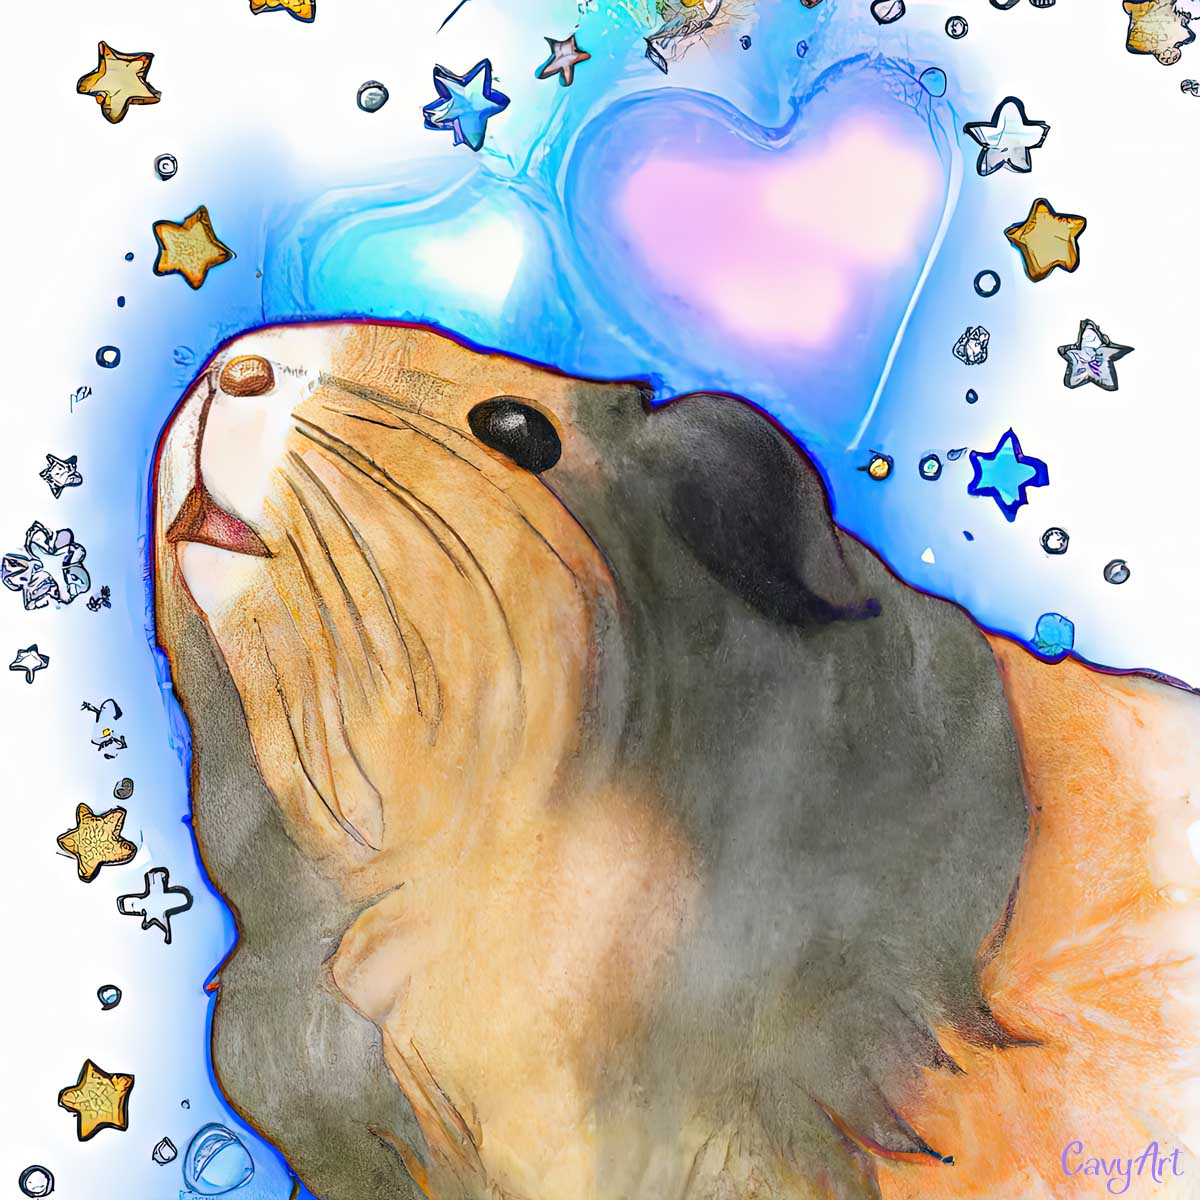 Pretty Guinea pig Illustration from CavyArt